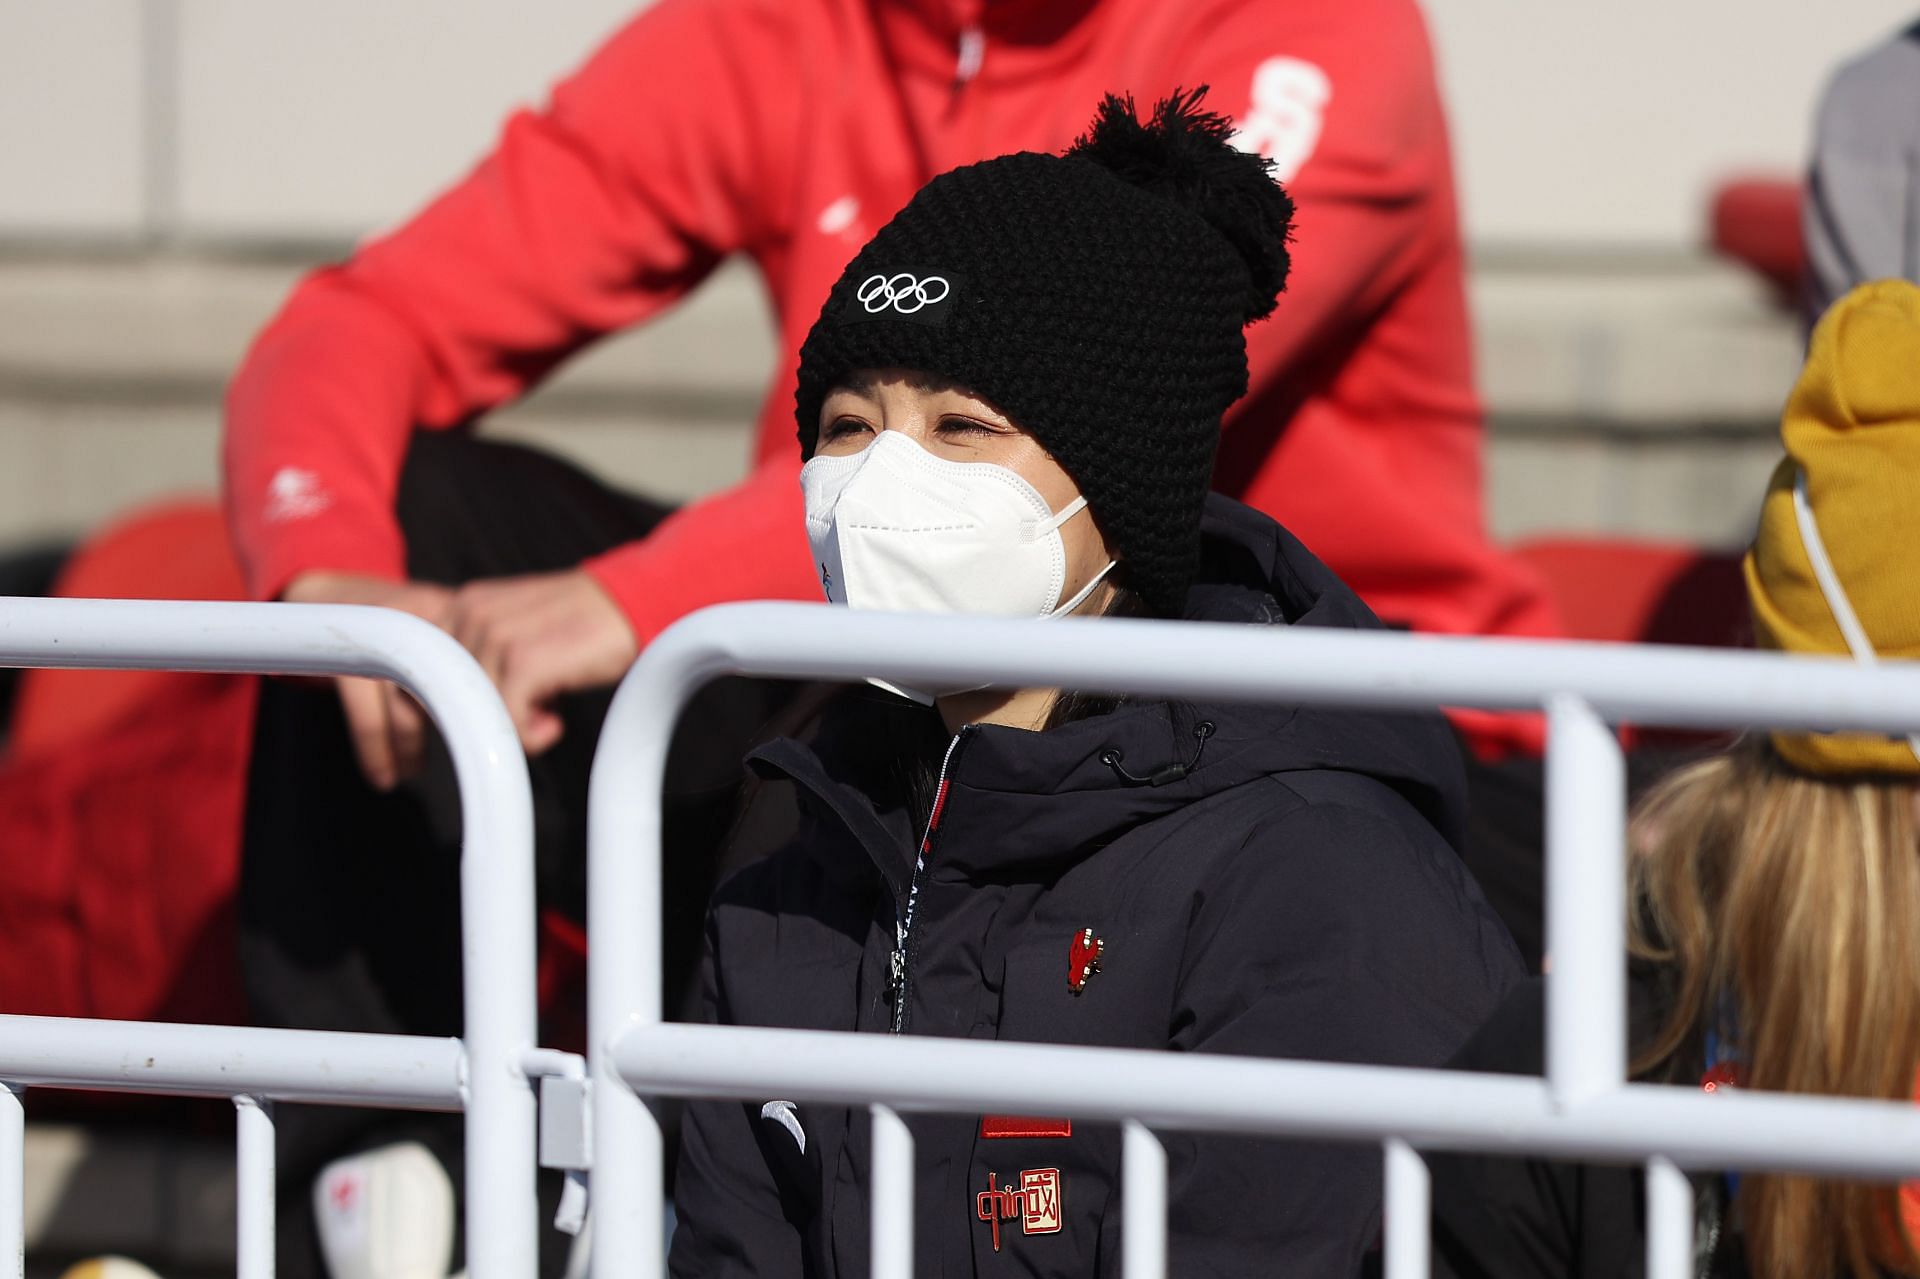 Peng Shuai at the Beijing 2022 Winter Olympics